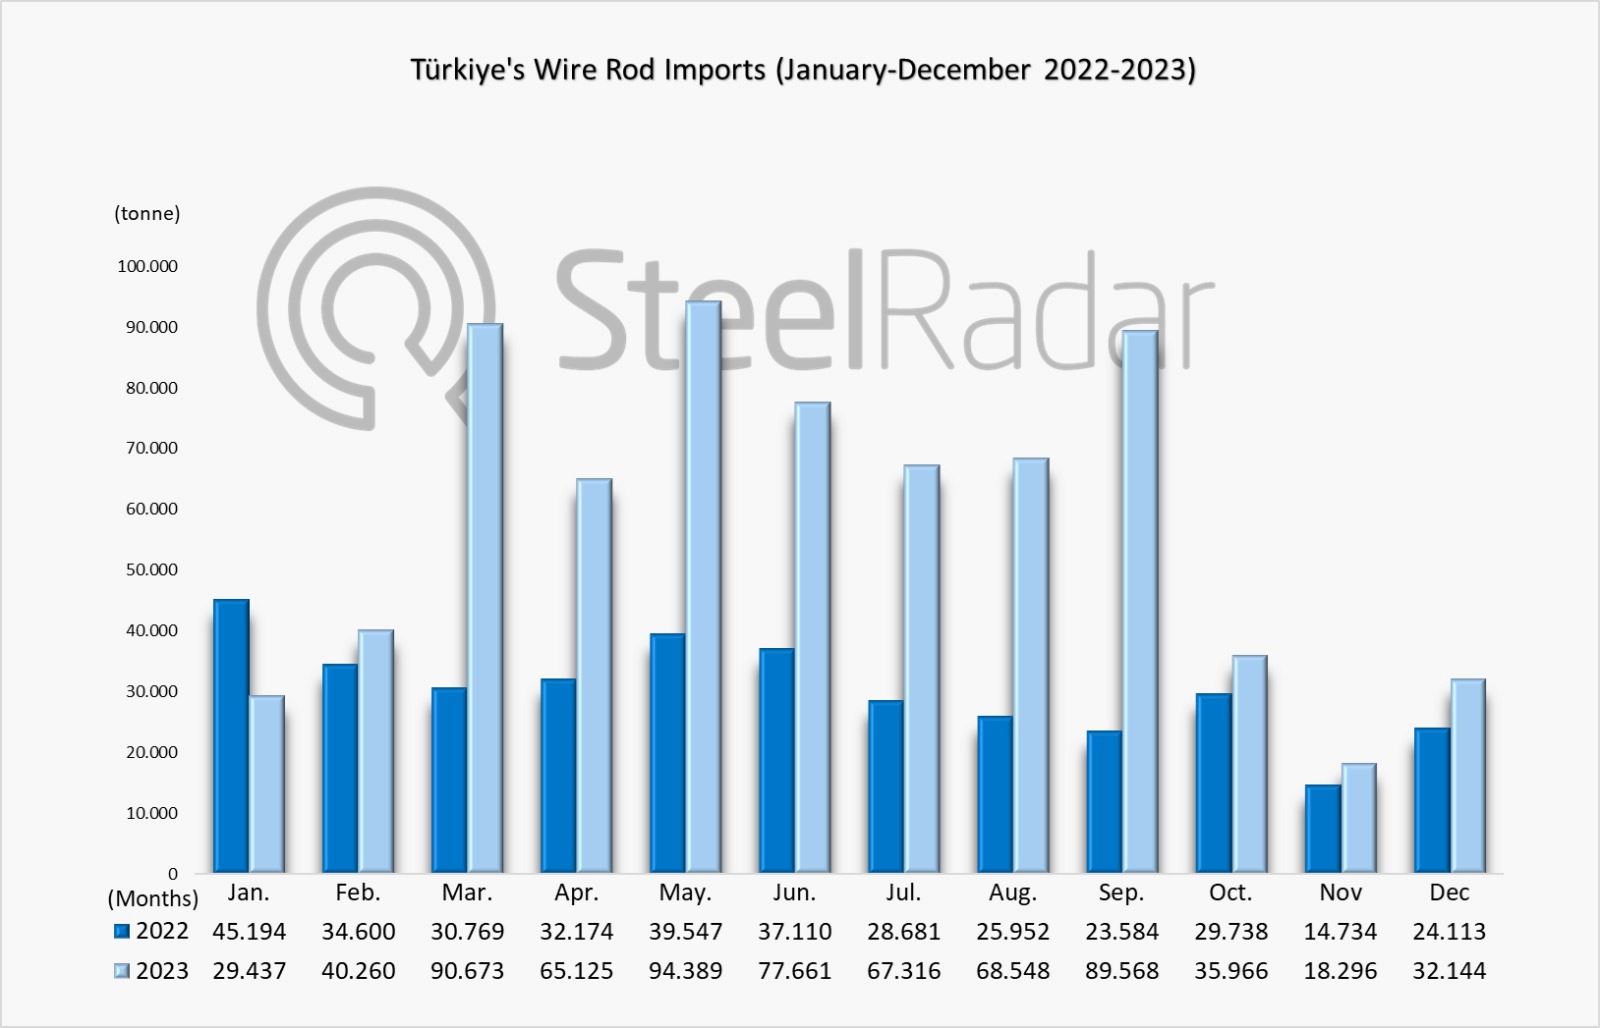 Türkiye's wire rod imports increased by 93.72% in 2023